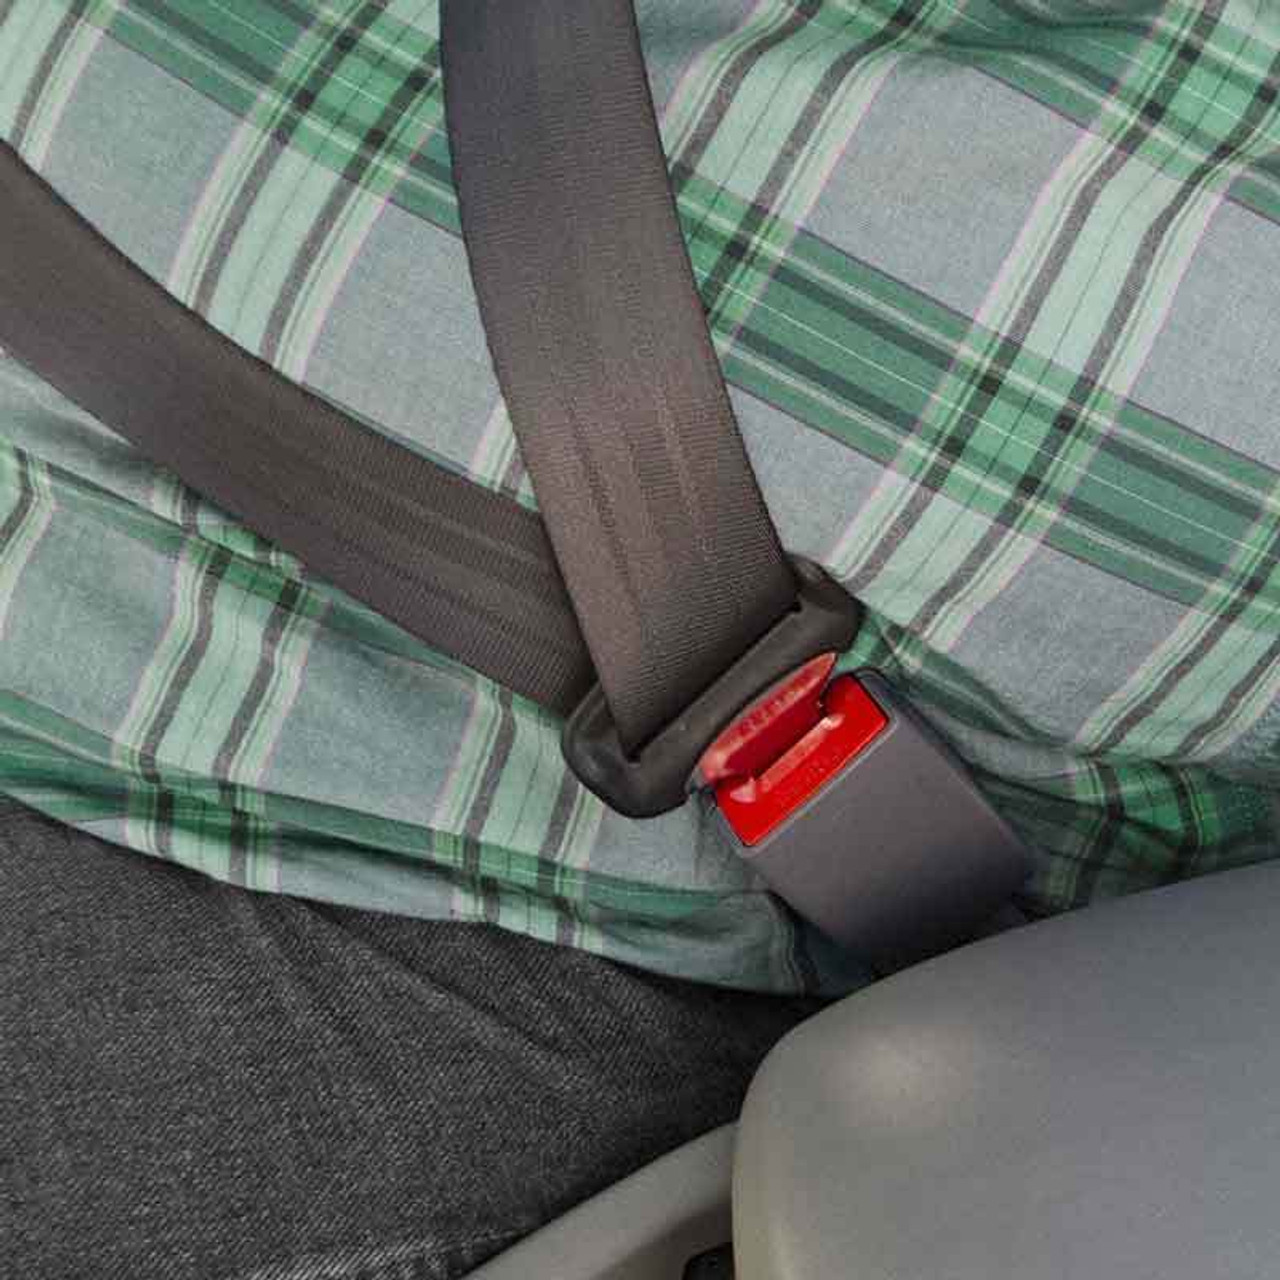 Type R Car Seat Belt Extender